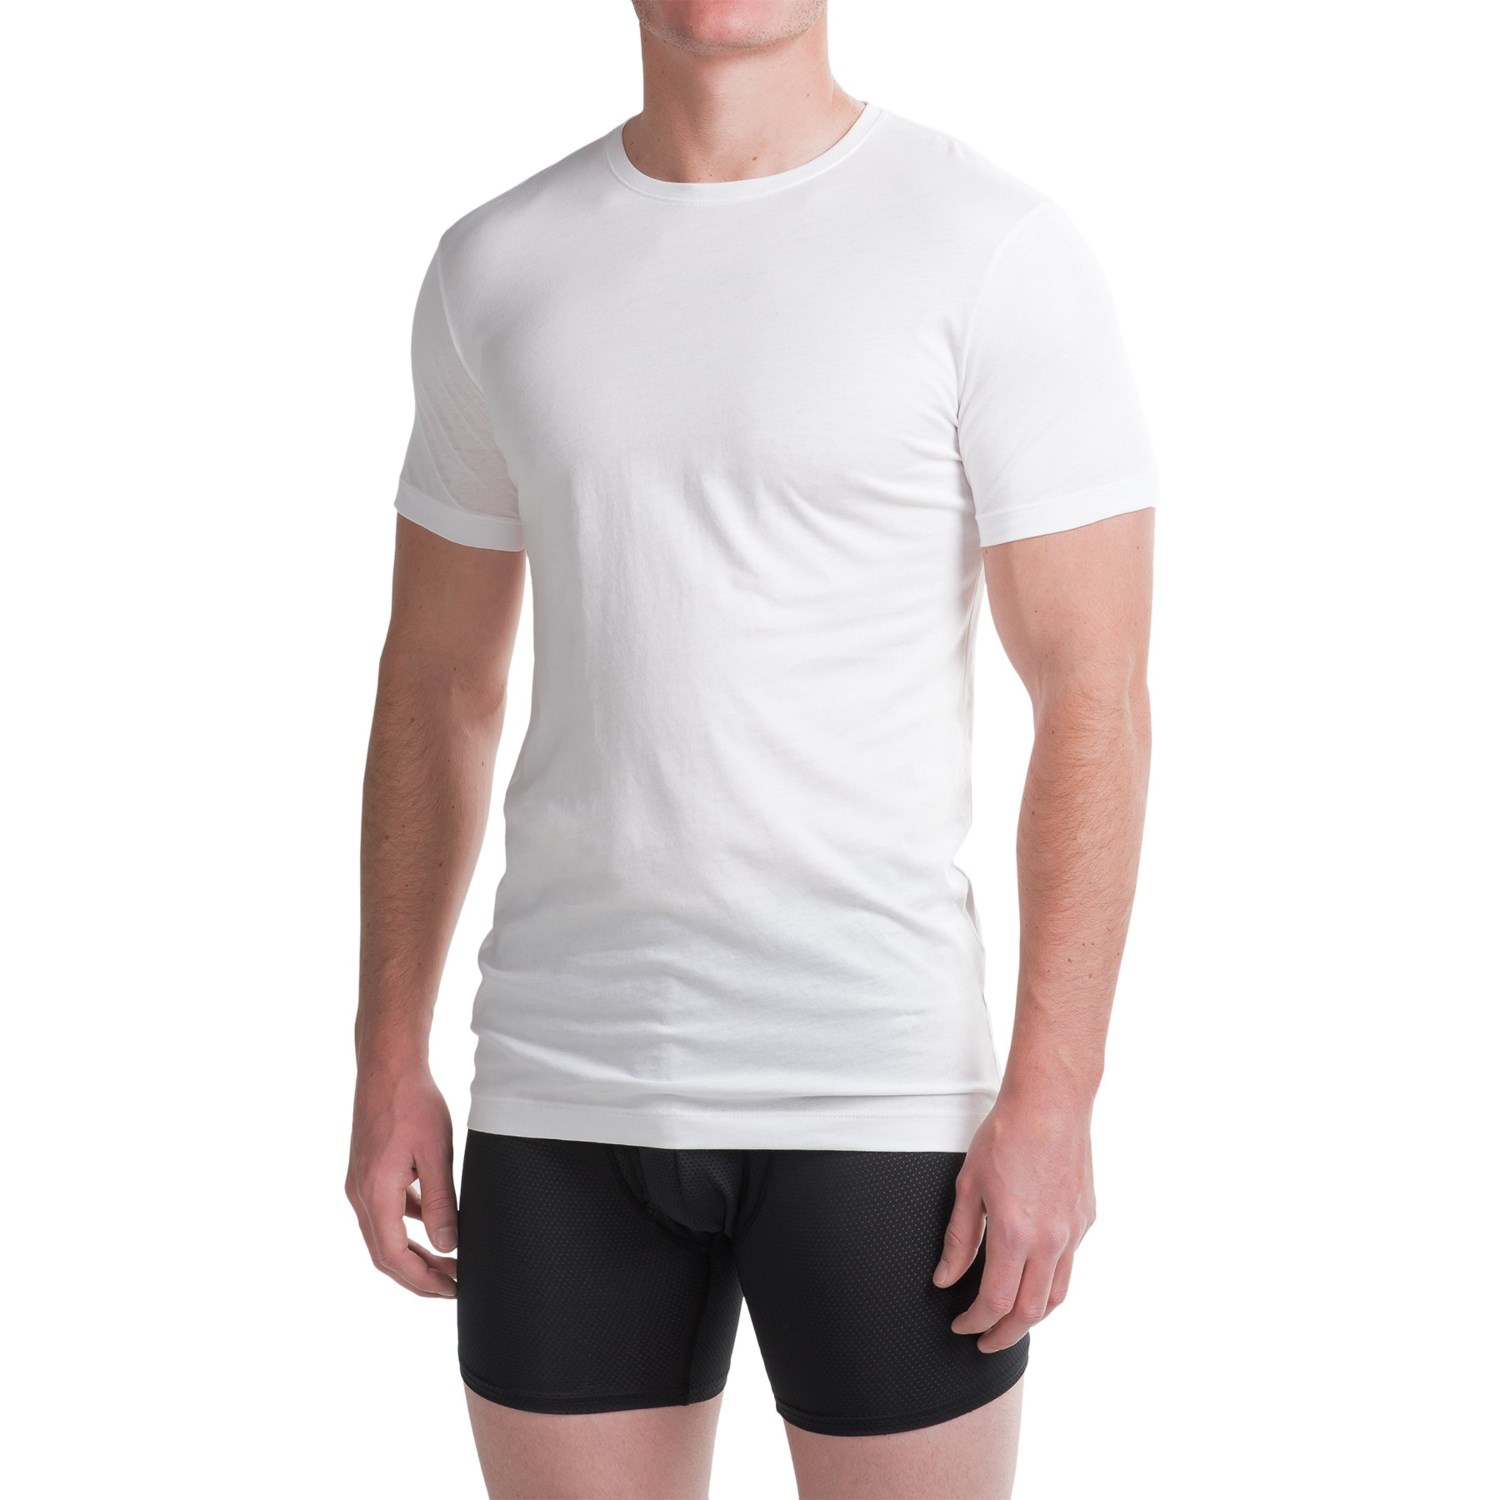 Ragman Pima Cotton Crew Neck Undershirts (For Men) - Save 45%